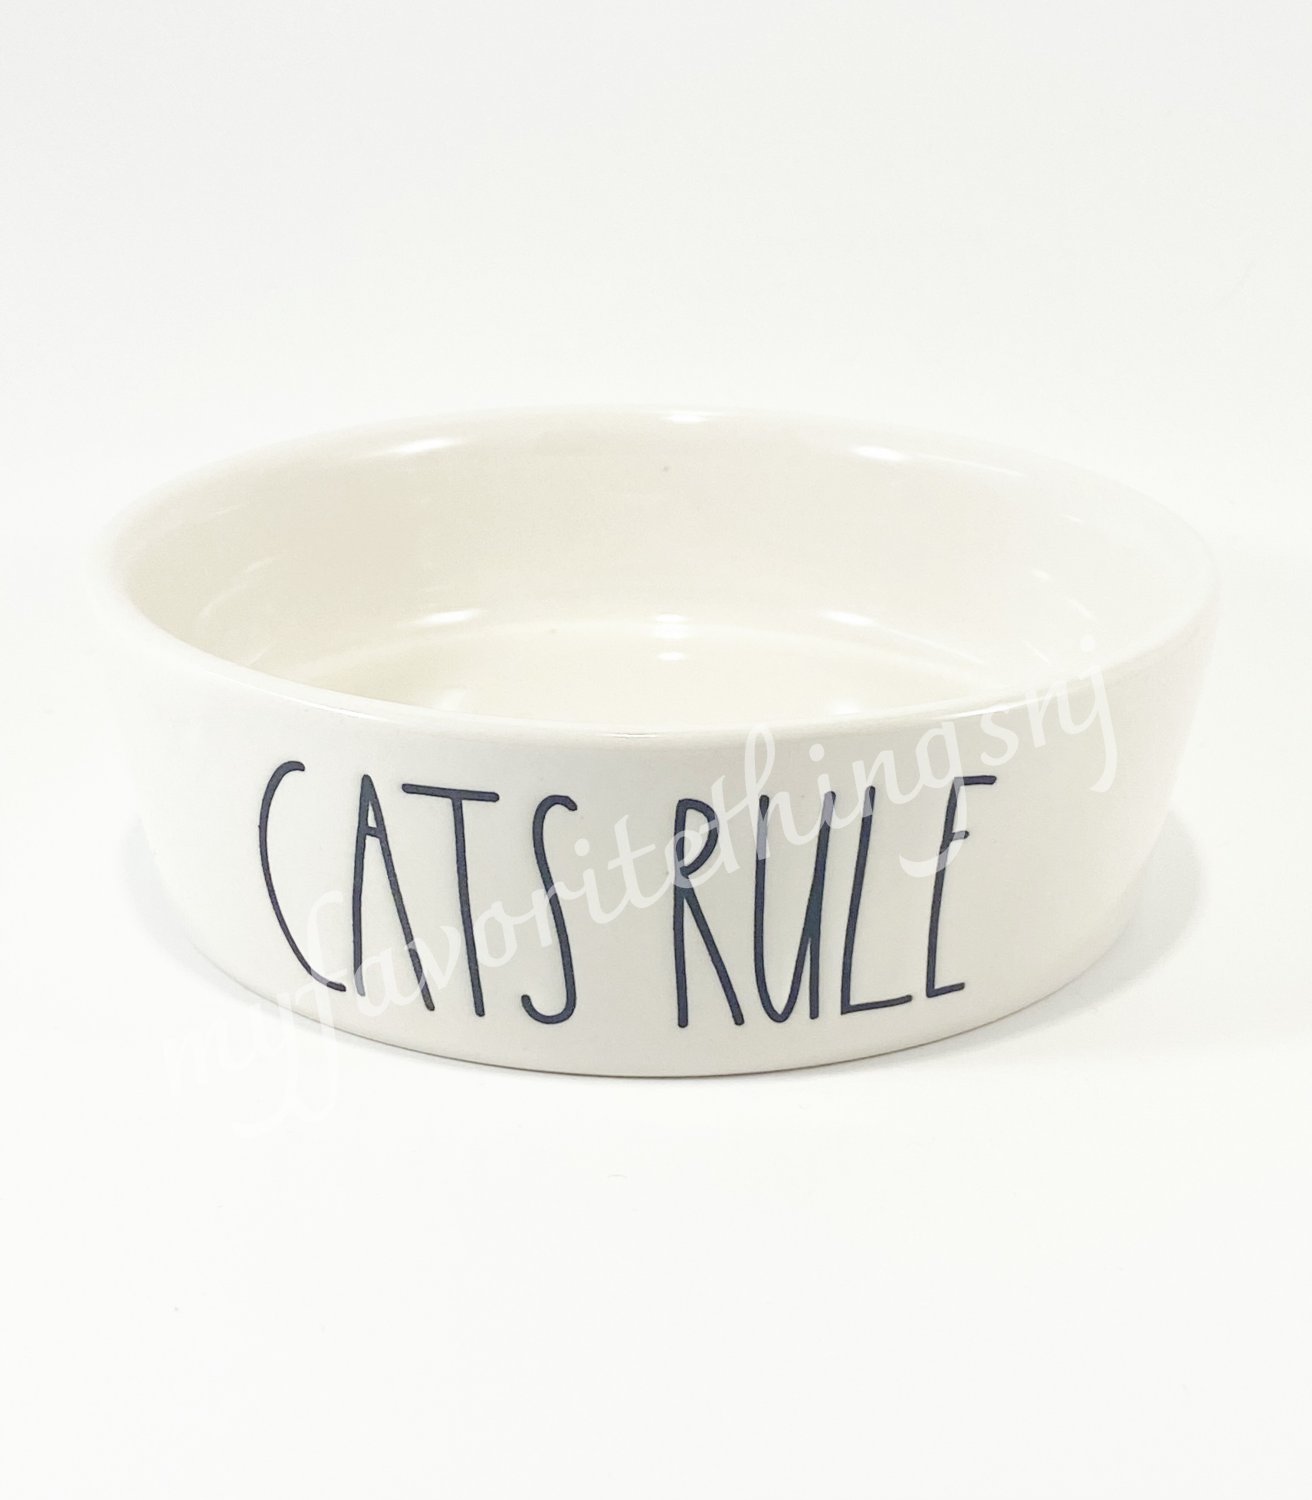 Rae Dunn Cats Rule White Ceramic Food Bowl / Water Bowl